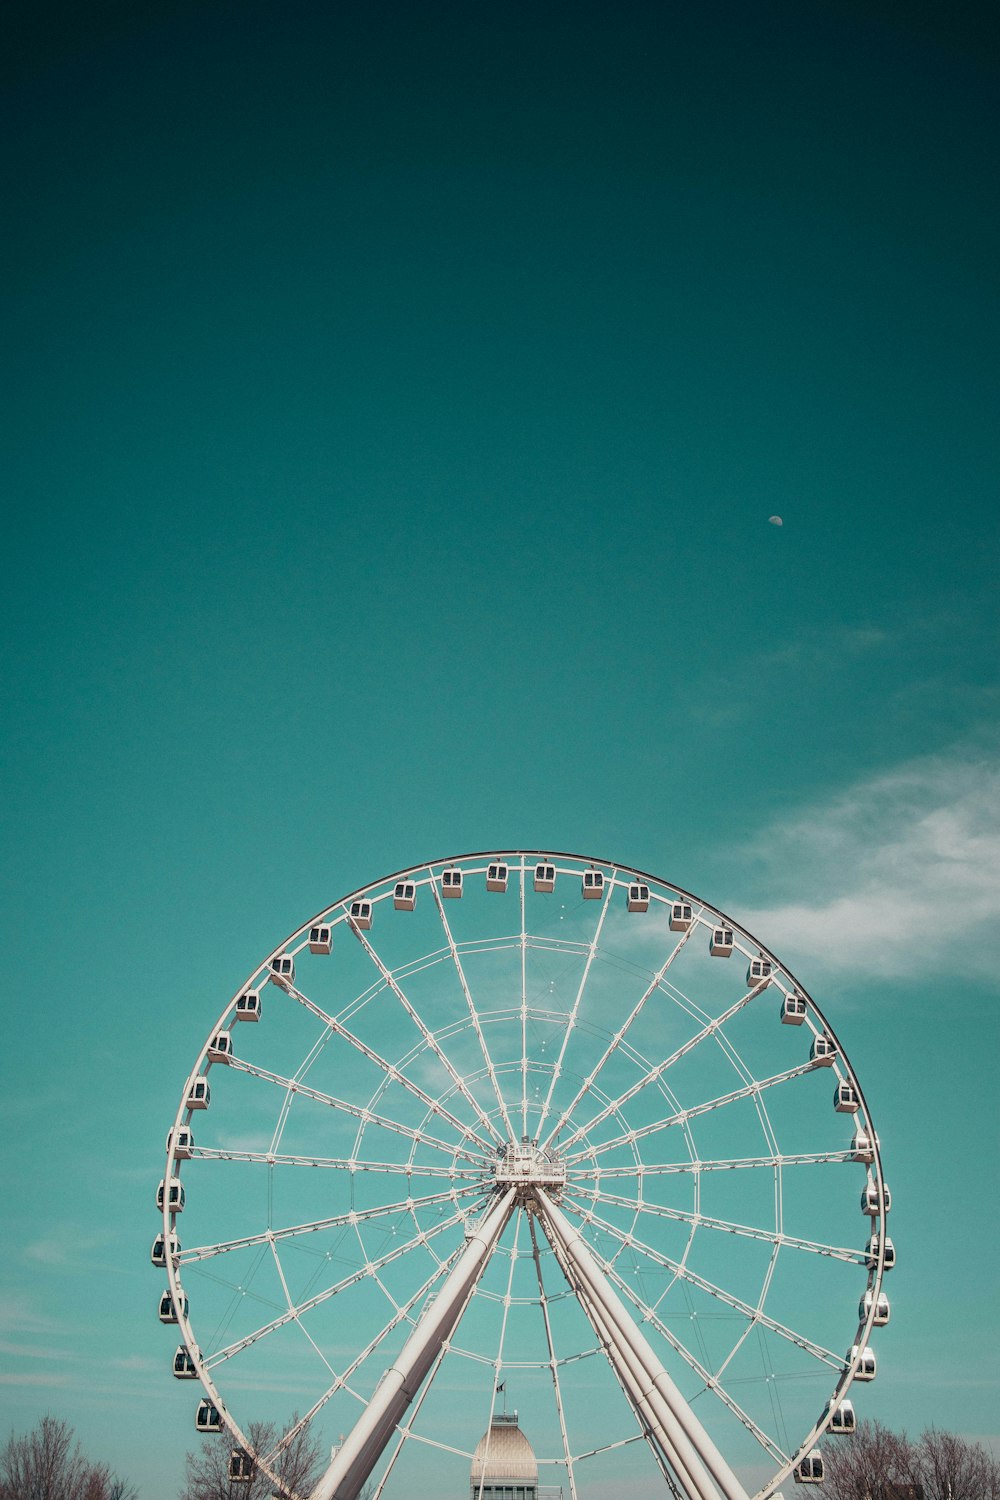 round white ferris wheel under gray and blue sky